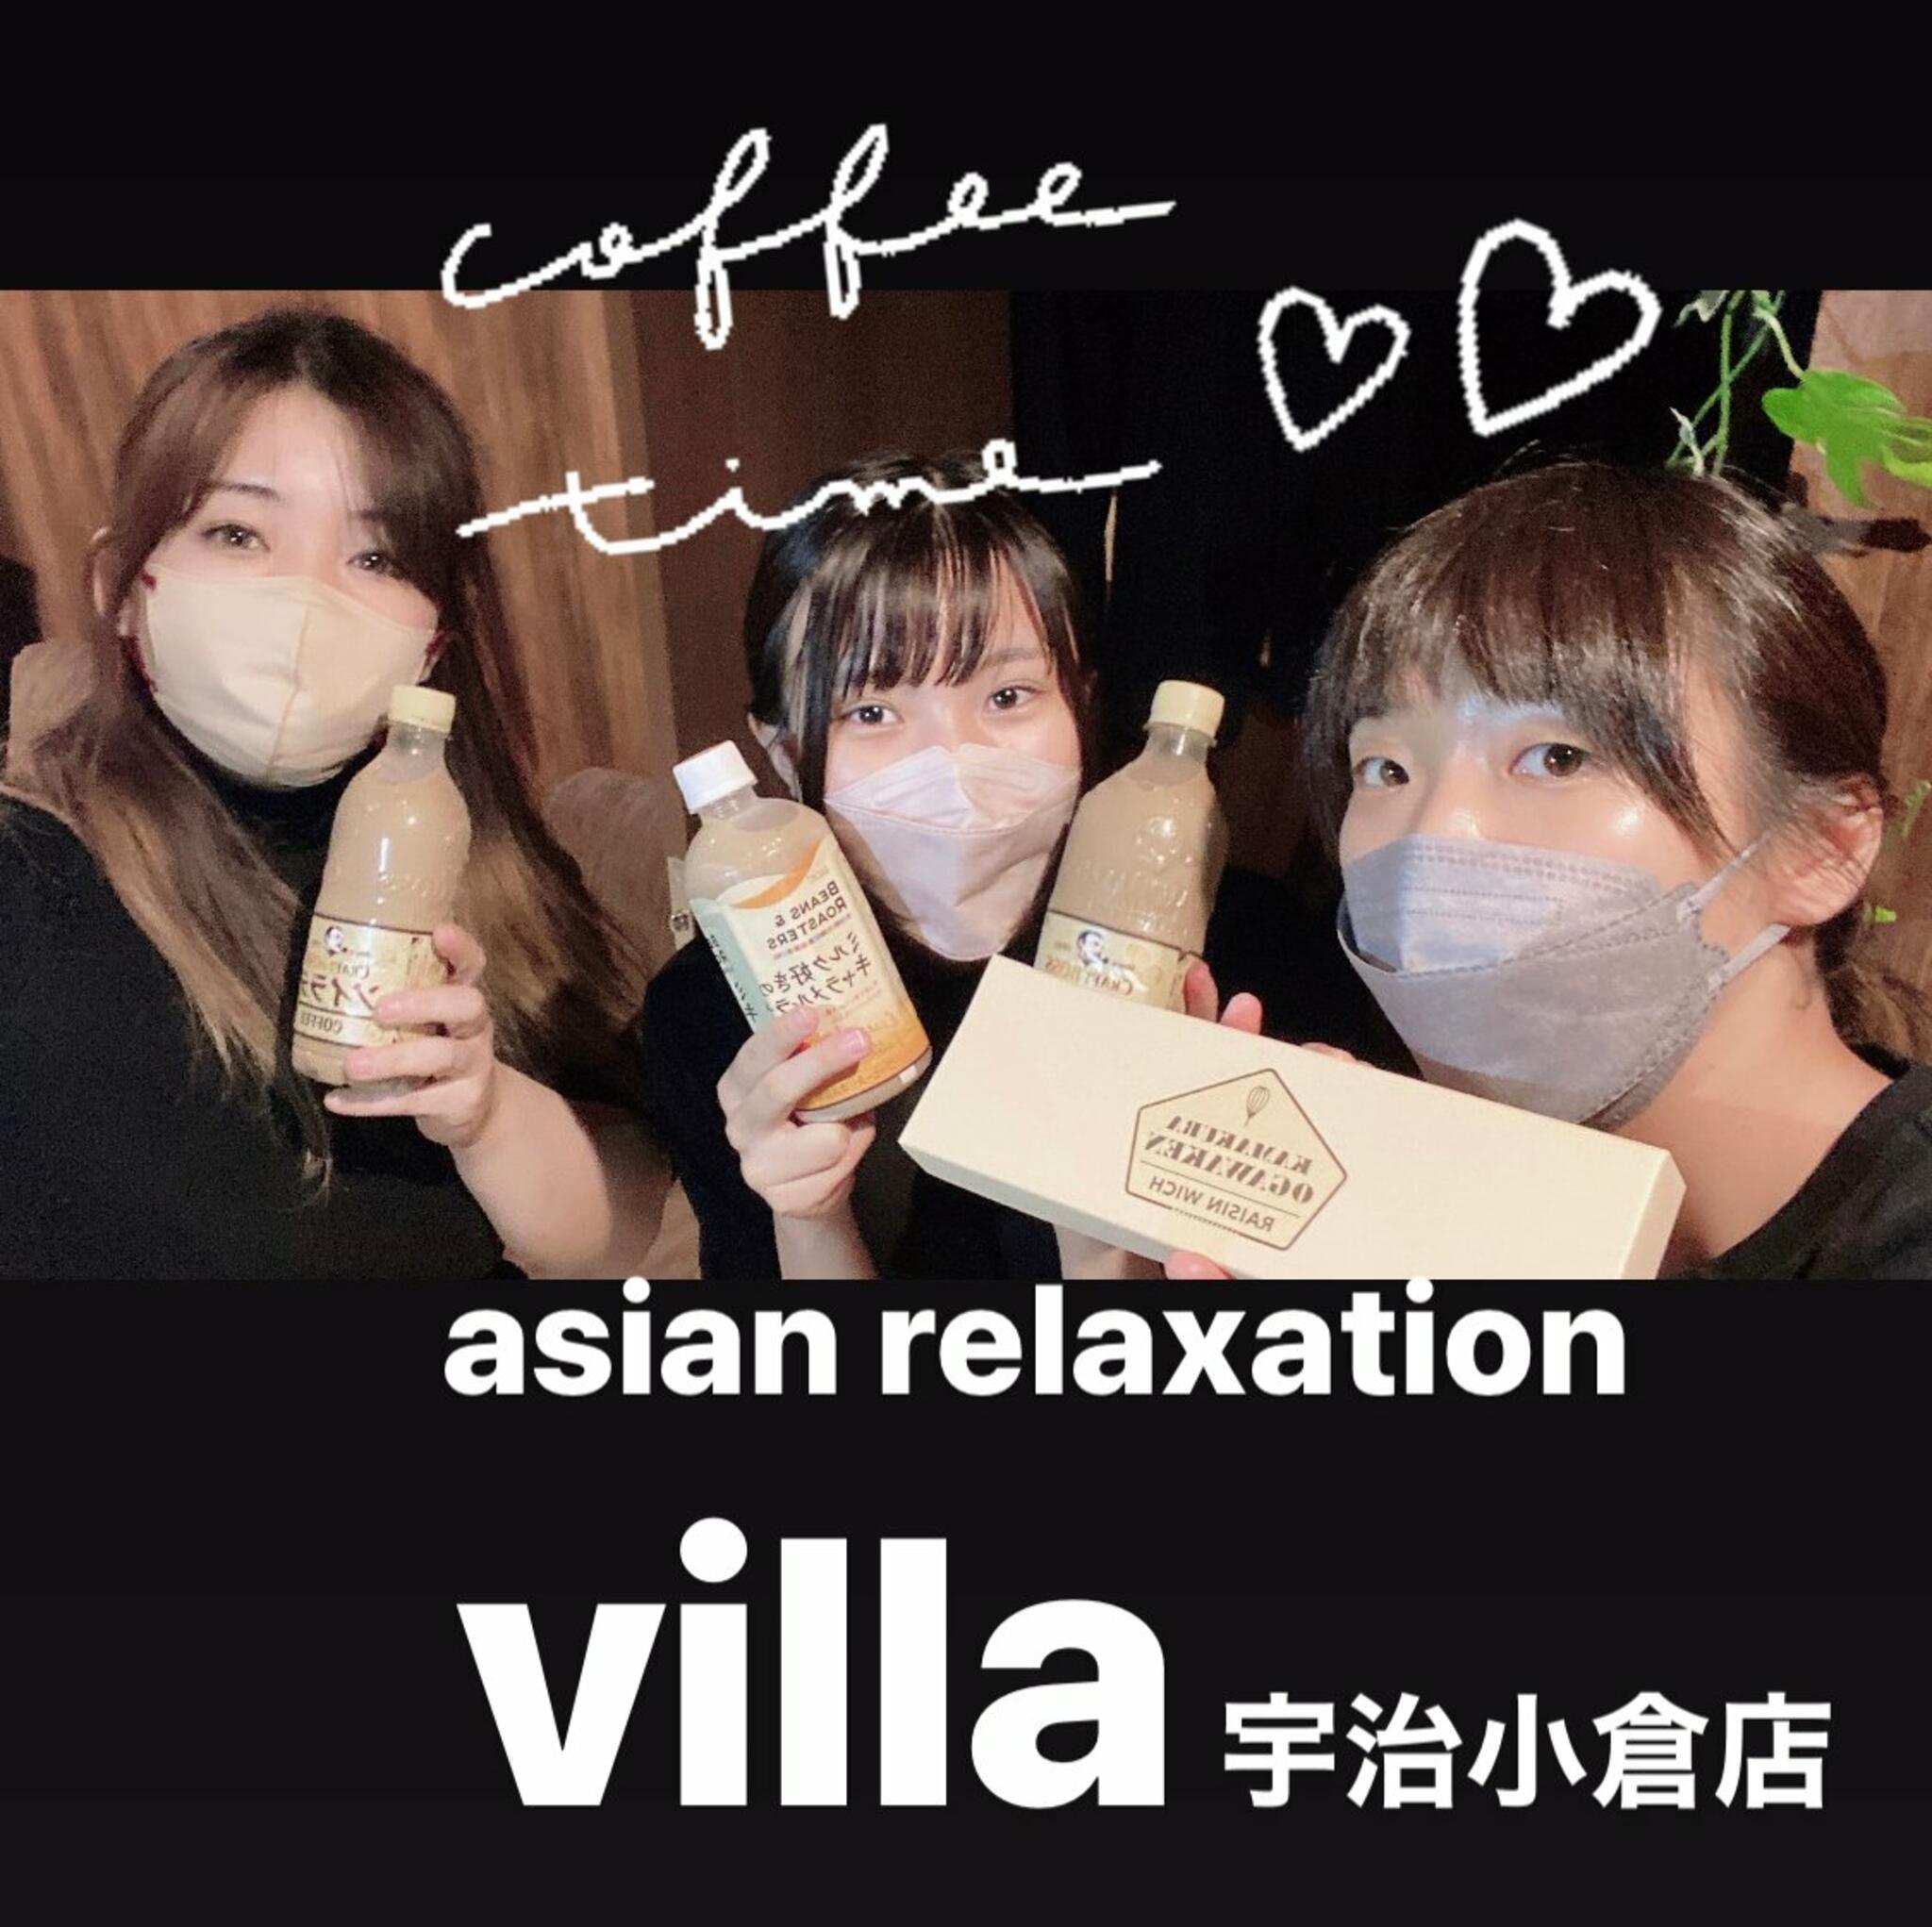 asian relaxation villa 宇治小倉店の代表写真2